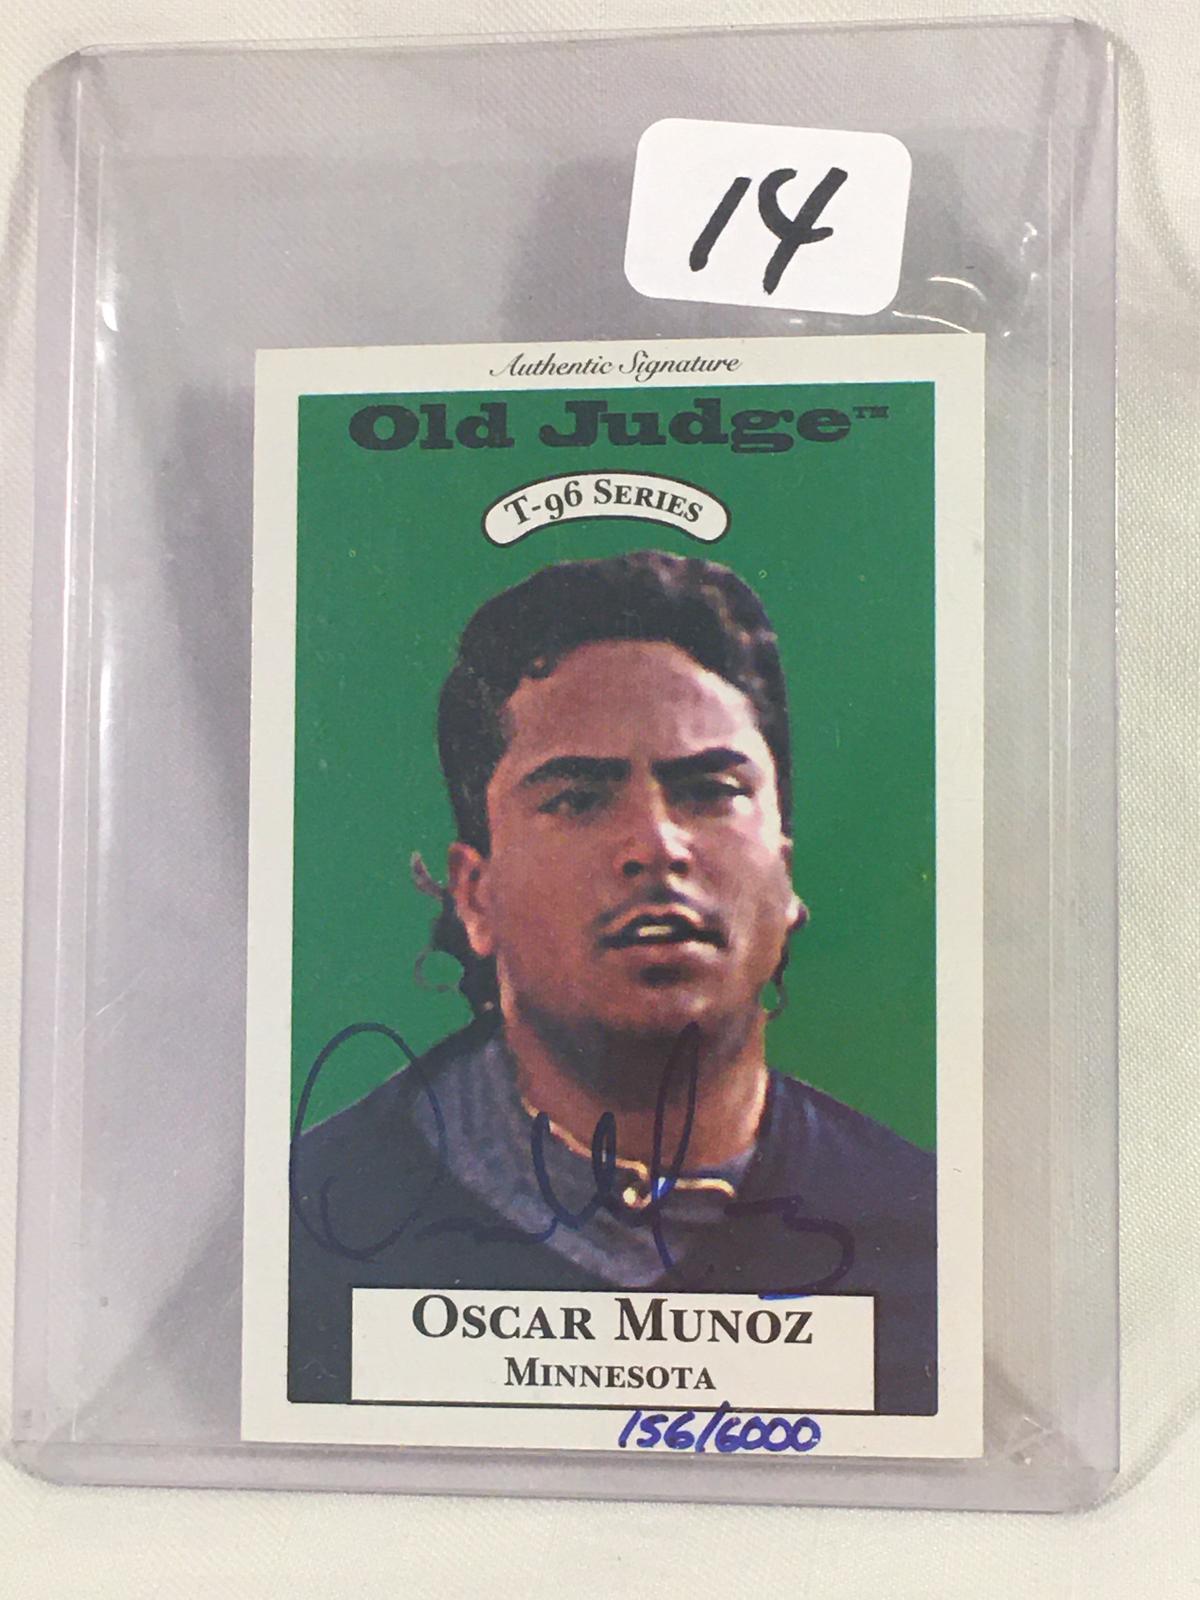 Collector NFL Football Signed Sport Card By: OPL Oscar Munoz 156/6000